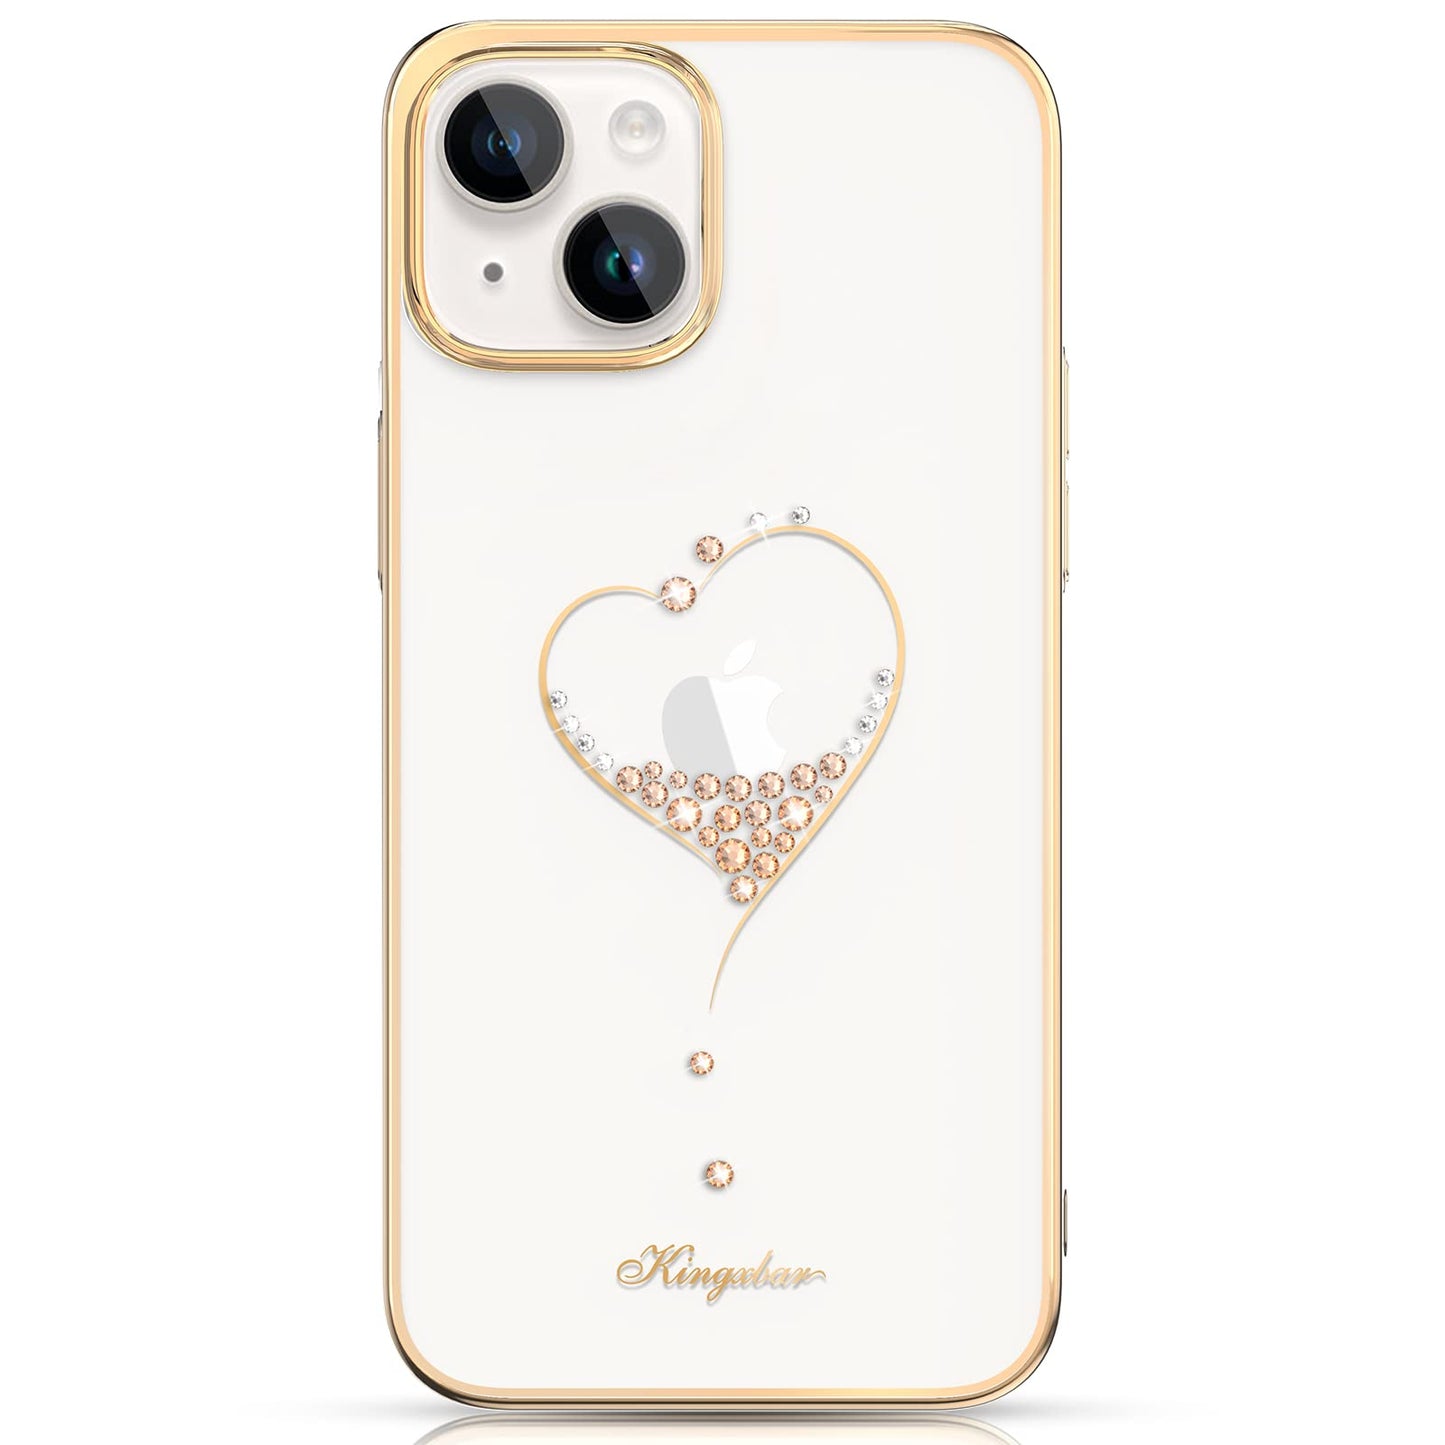 Kingxbar Swarovski Case For iPhone 11 Pro - Heart Gold